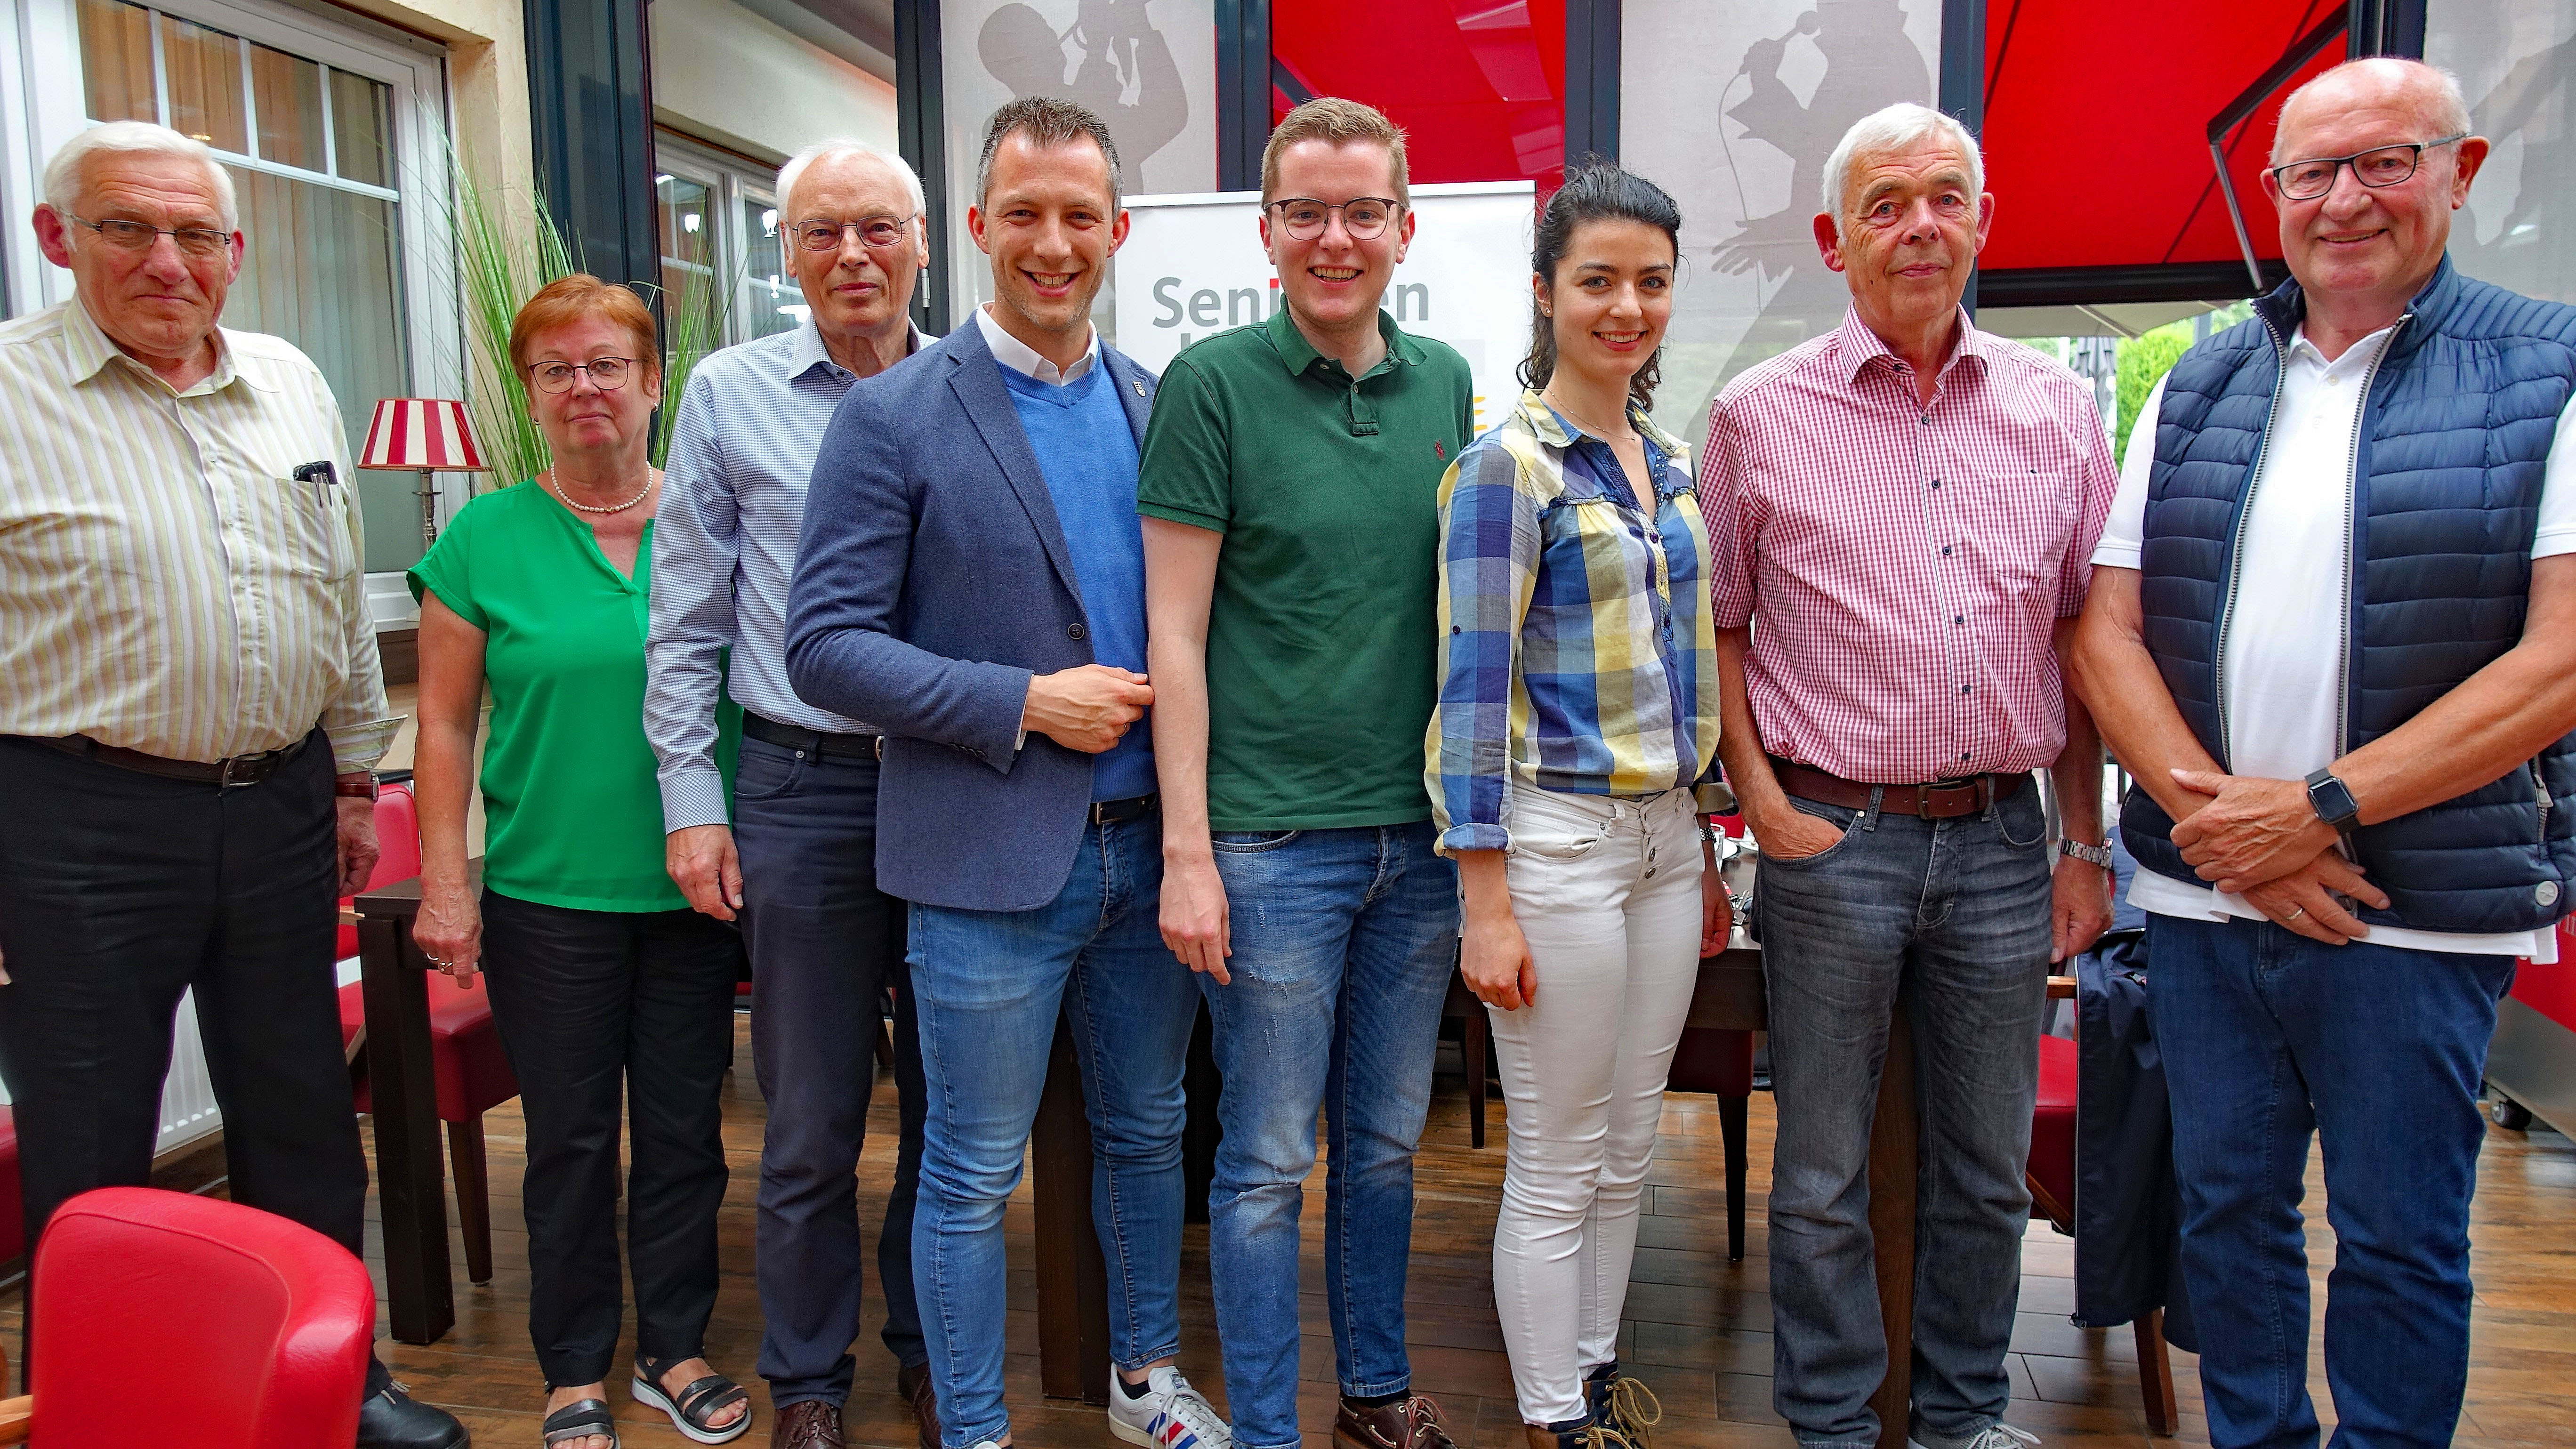 von links: Hermann Nordmann, Marianne Albers, Hans Hoymann, André Hüttemeyer, Tim Dorniak, Anna Frohn, Helmut Hüttig, Gisbert Dödtmann